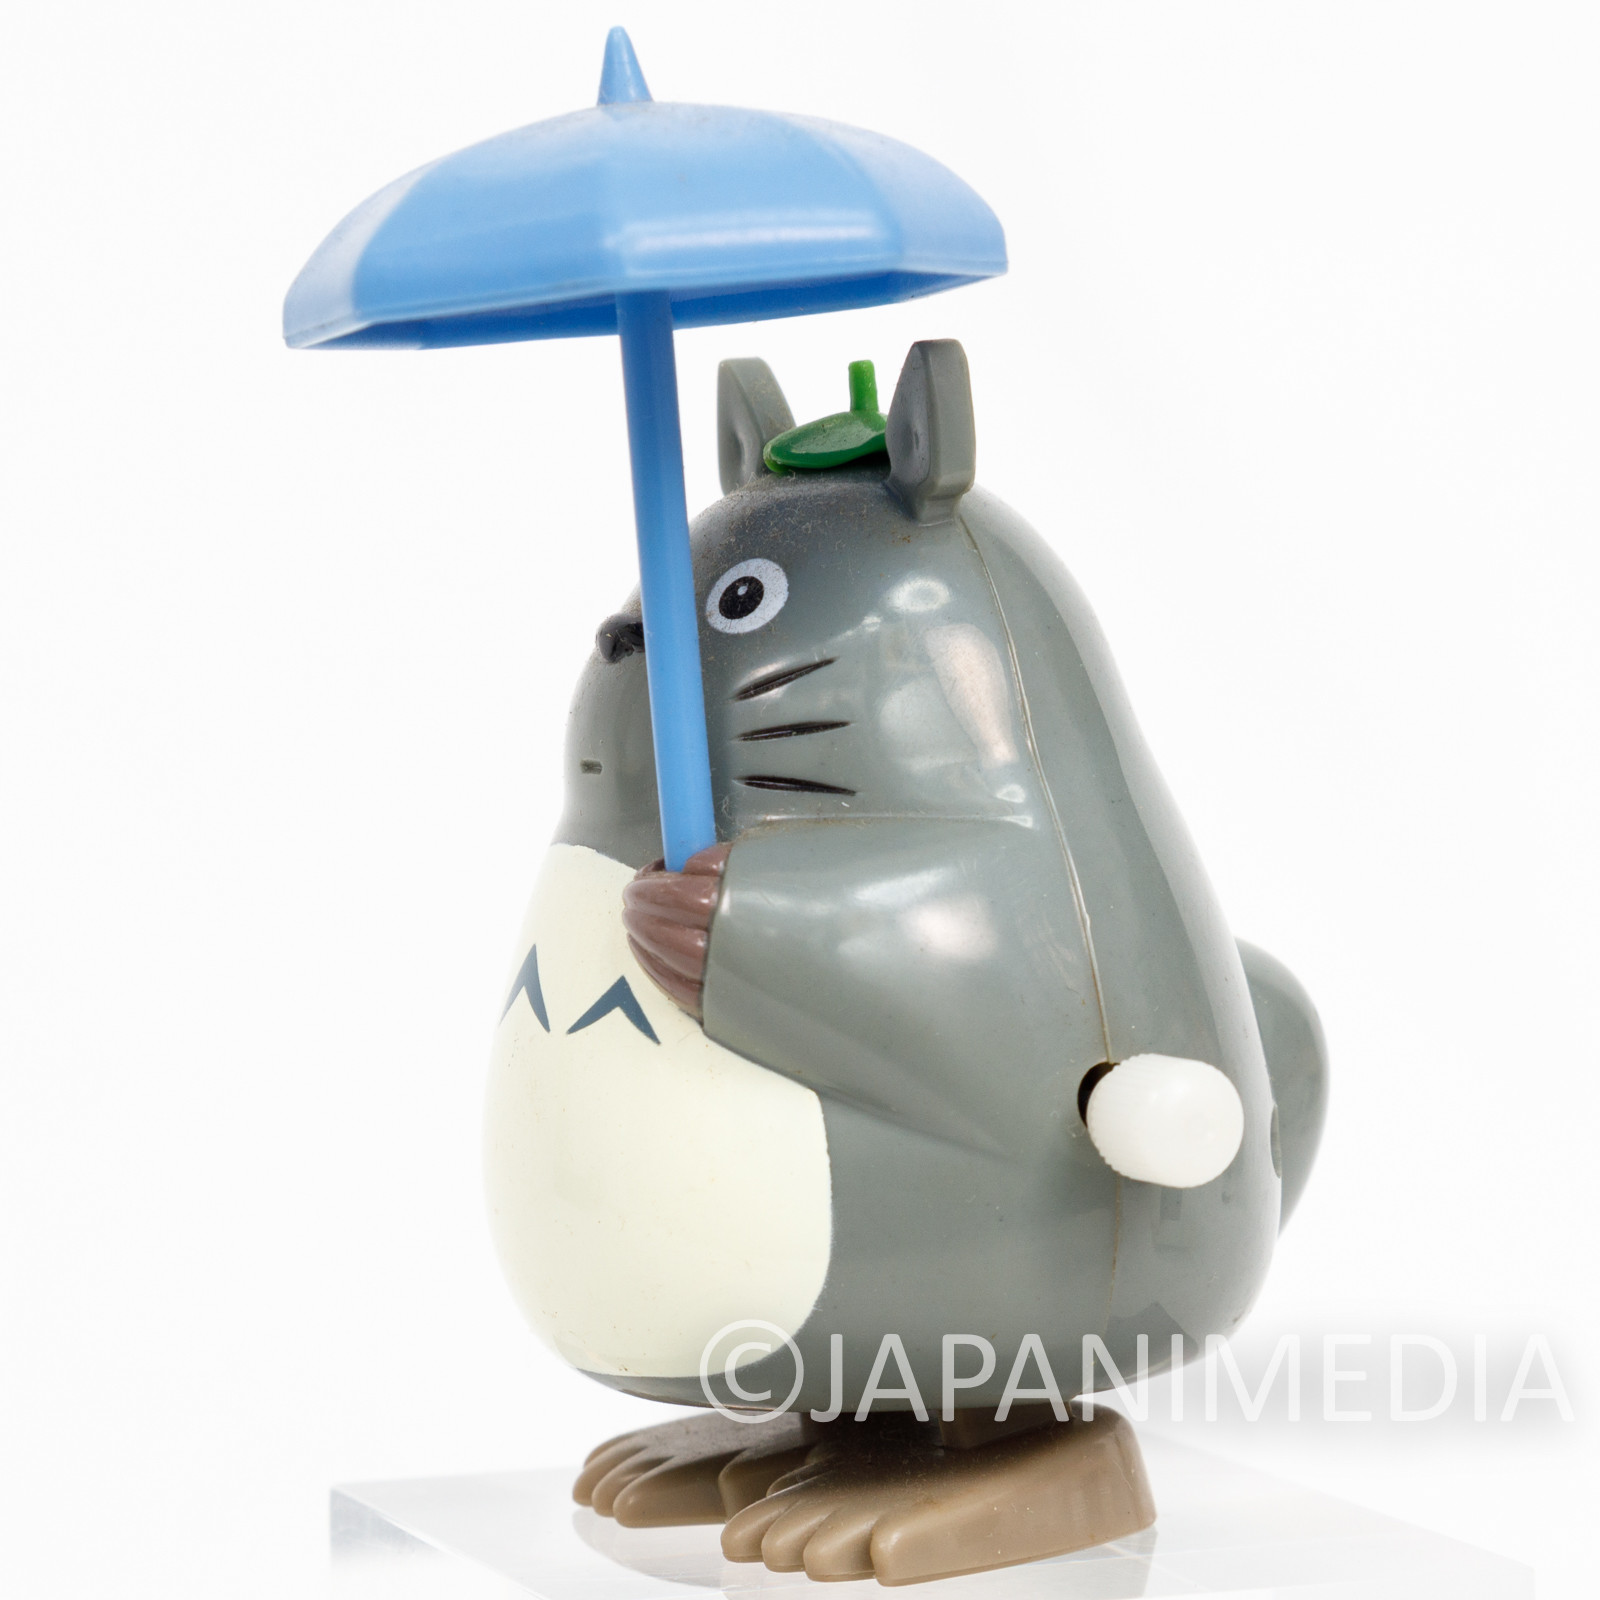 Studio Ghibli My neighbor Totoro Edition Balance Figures – AKAZUKI